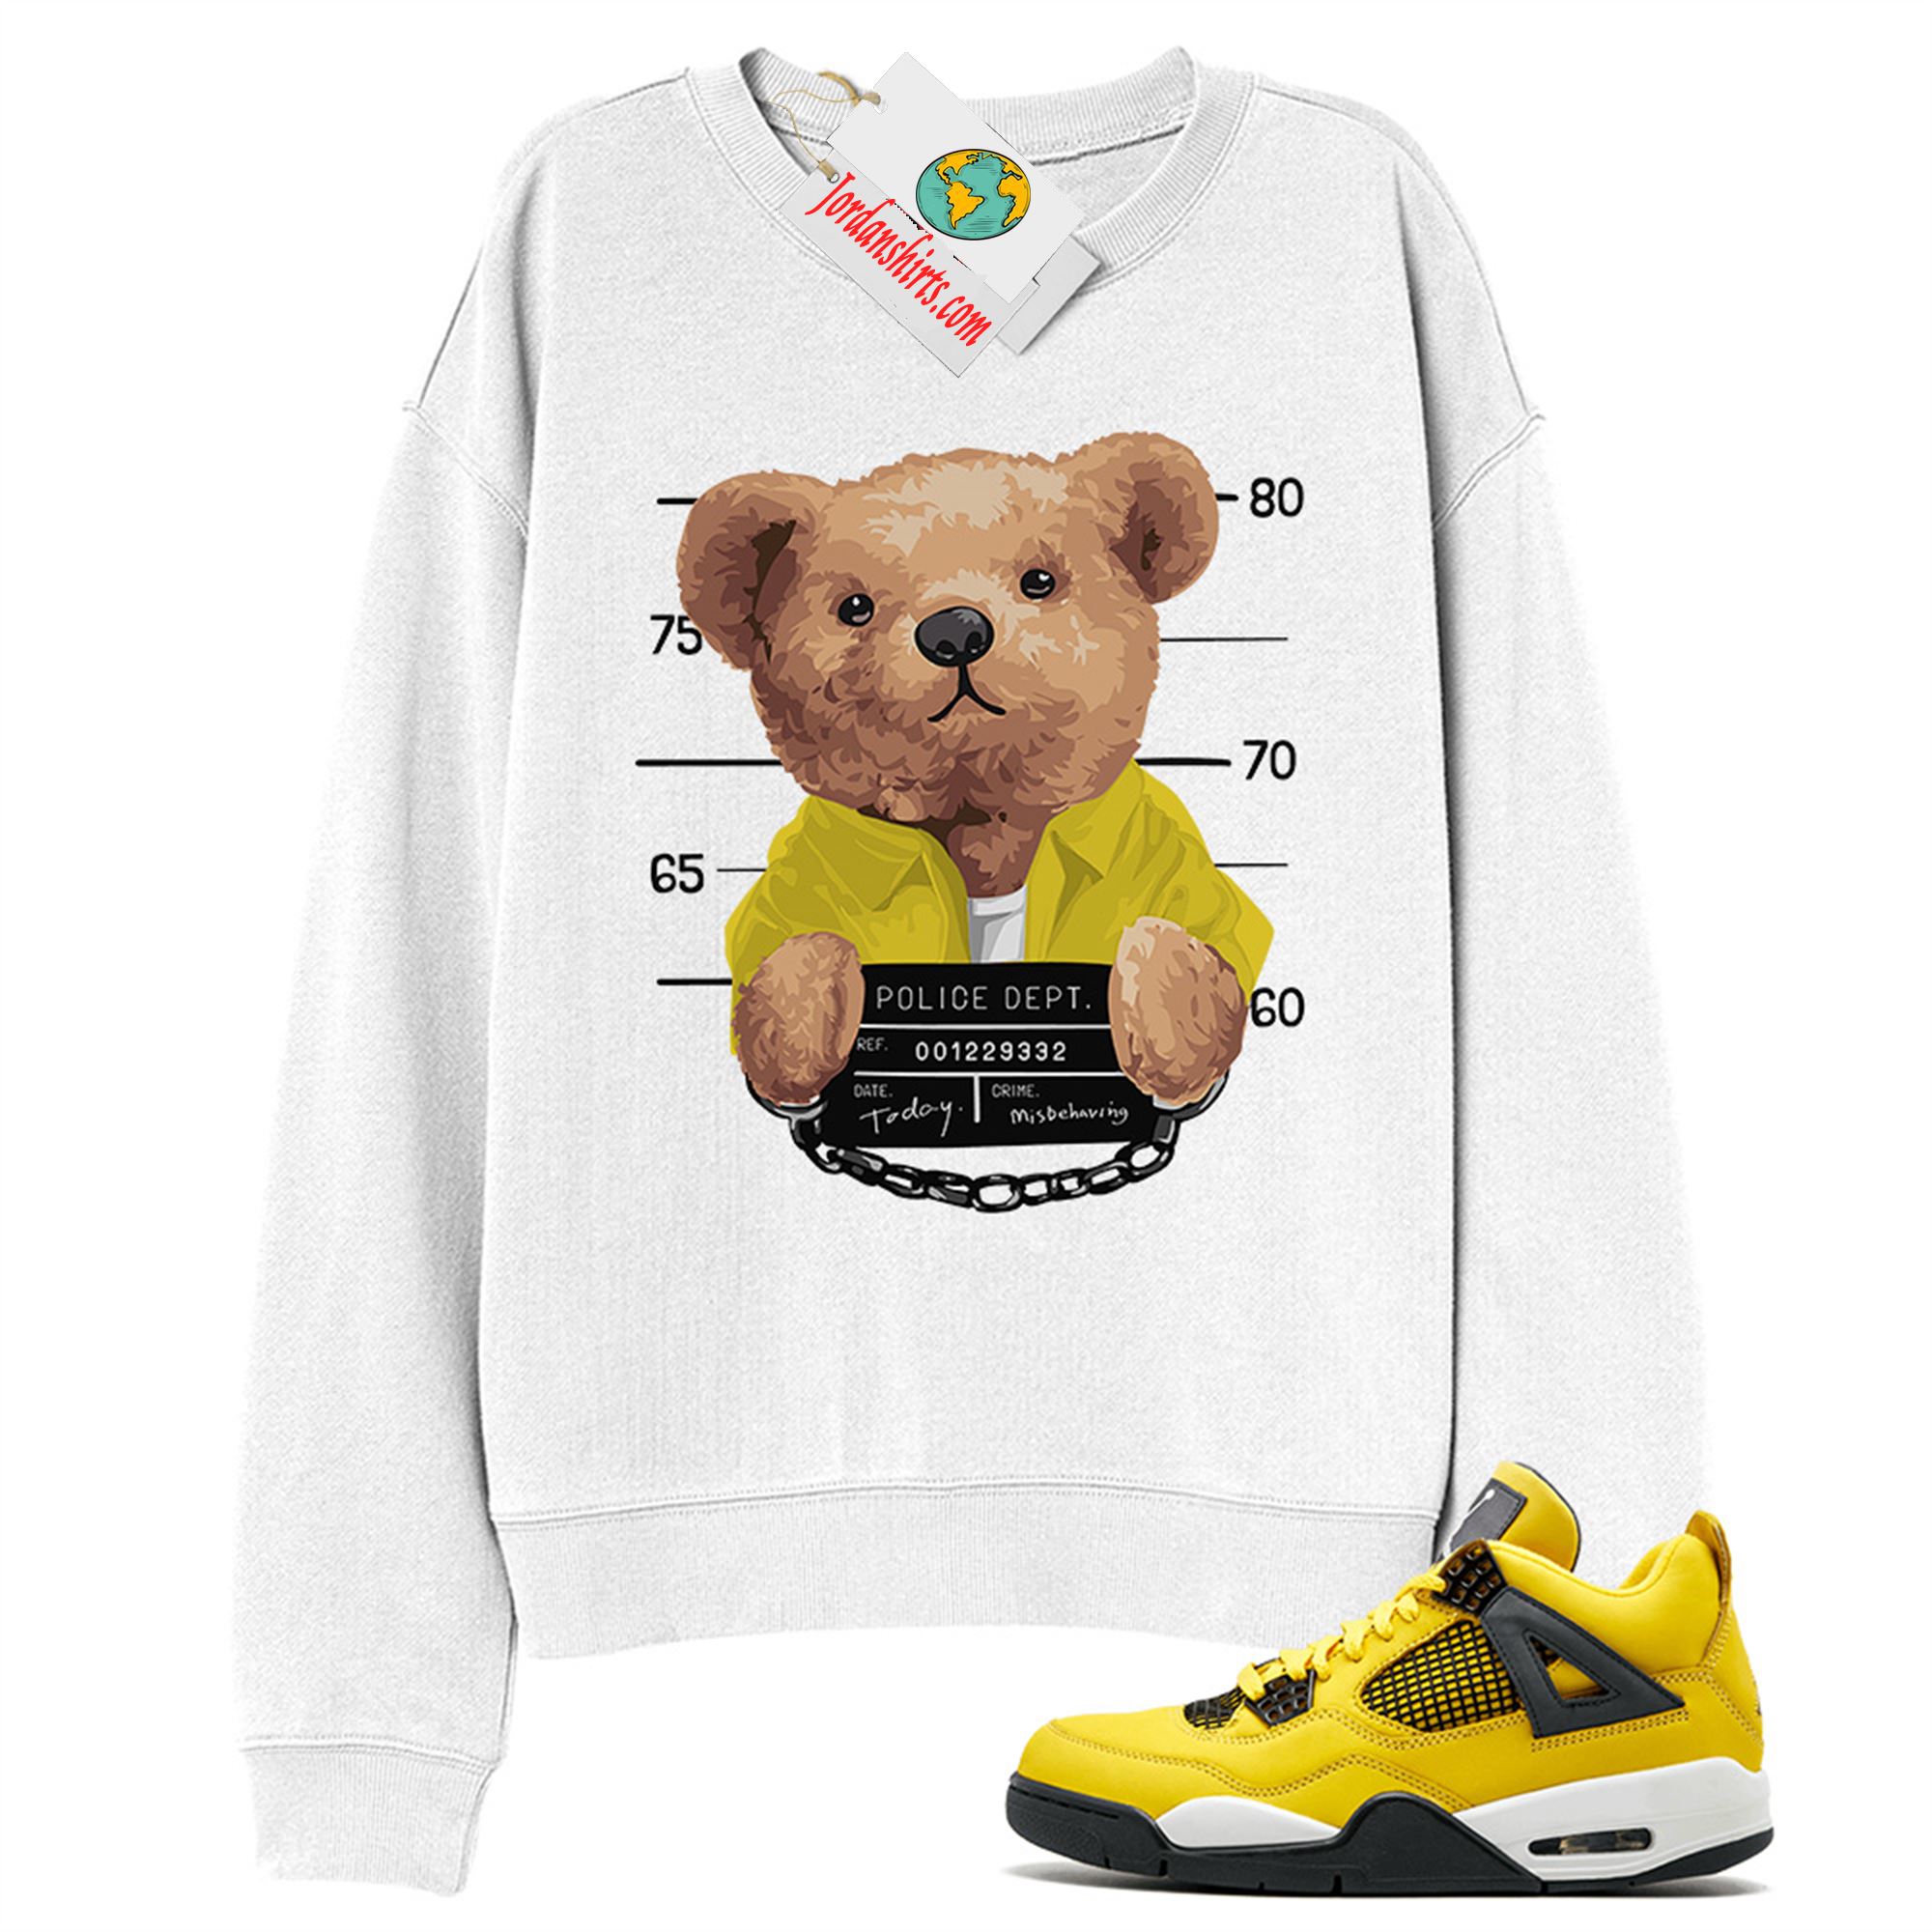 Jordan 4 Sweatshirt, Criminal Teddy Bear White Sweatshirt Air Jordan 4 Tour Yellowlightning 4s Size Up To 5xl